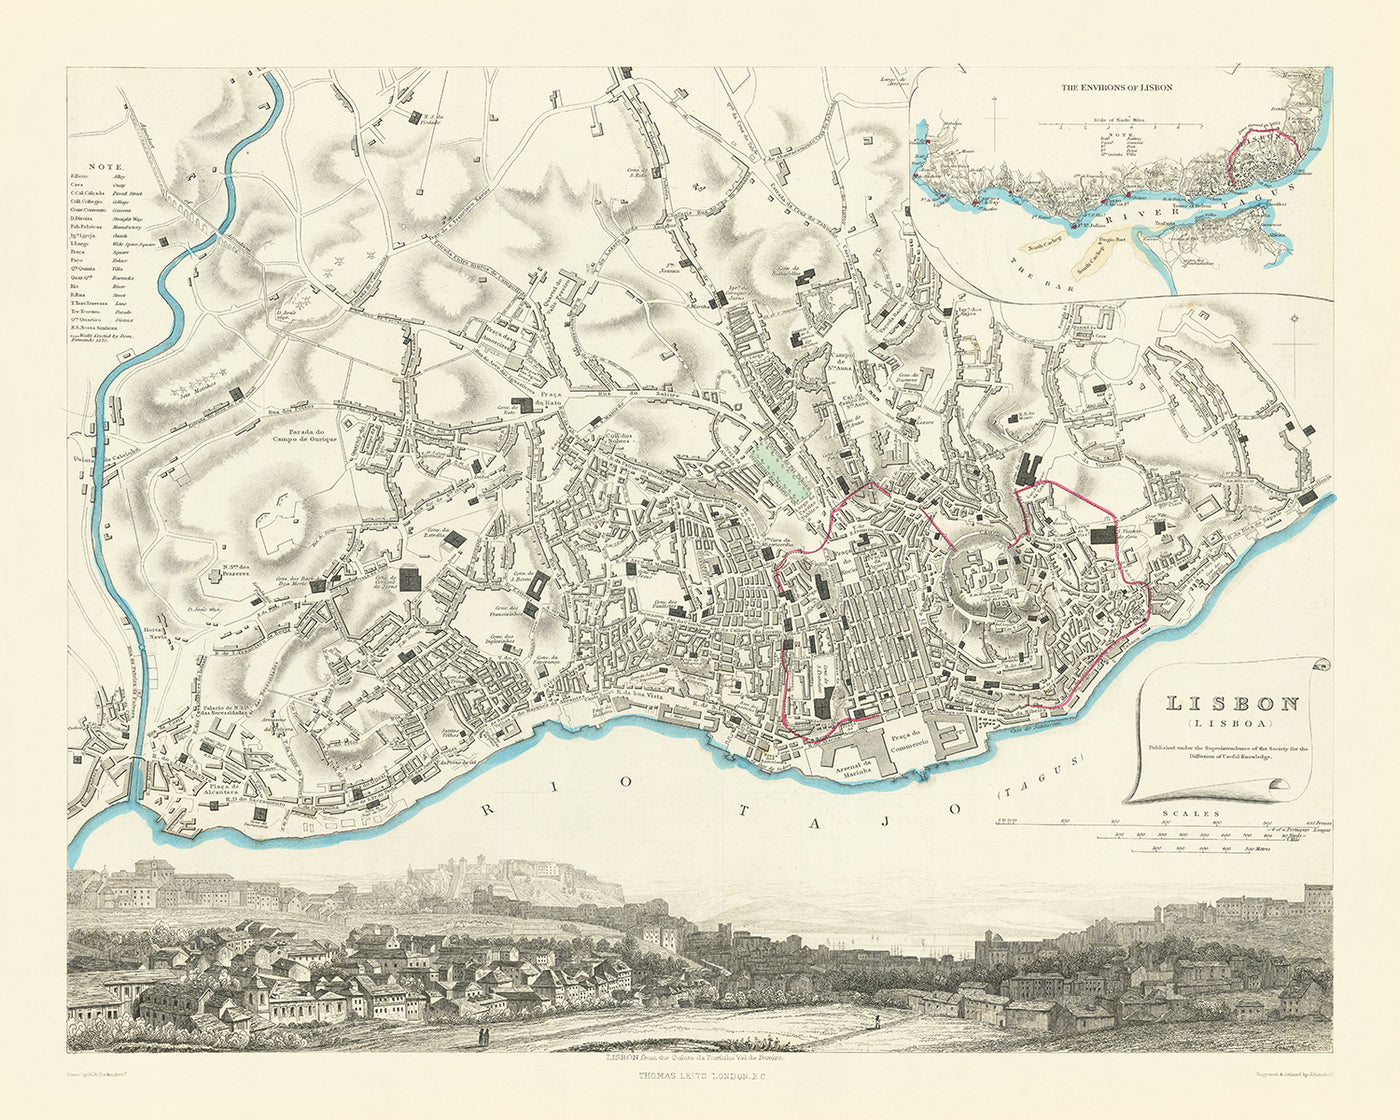 Old Map of Lisbon by SDUK, 1870: Alfama, Bairro Alto, Castello de S. Jorge, Estrella Basilica, Tagus River